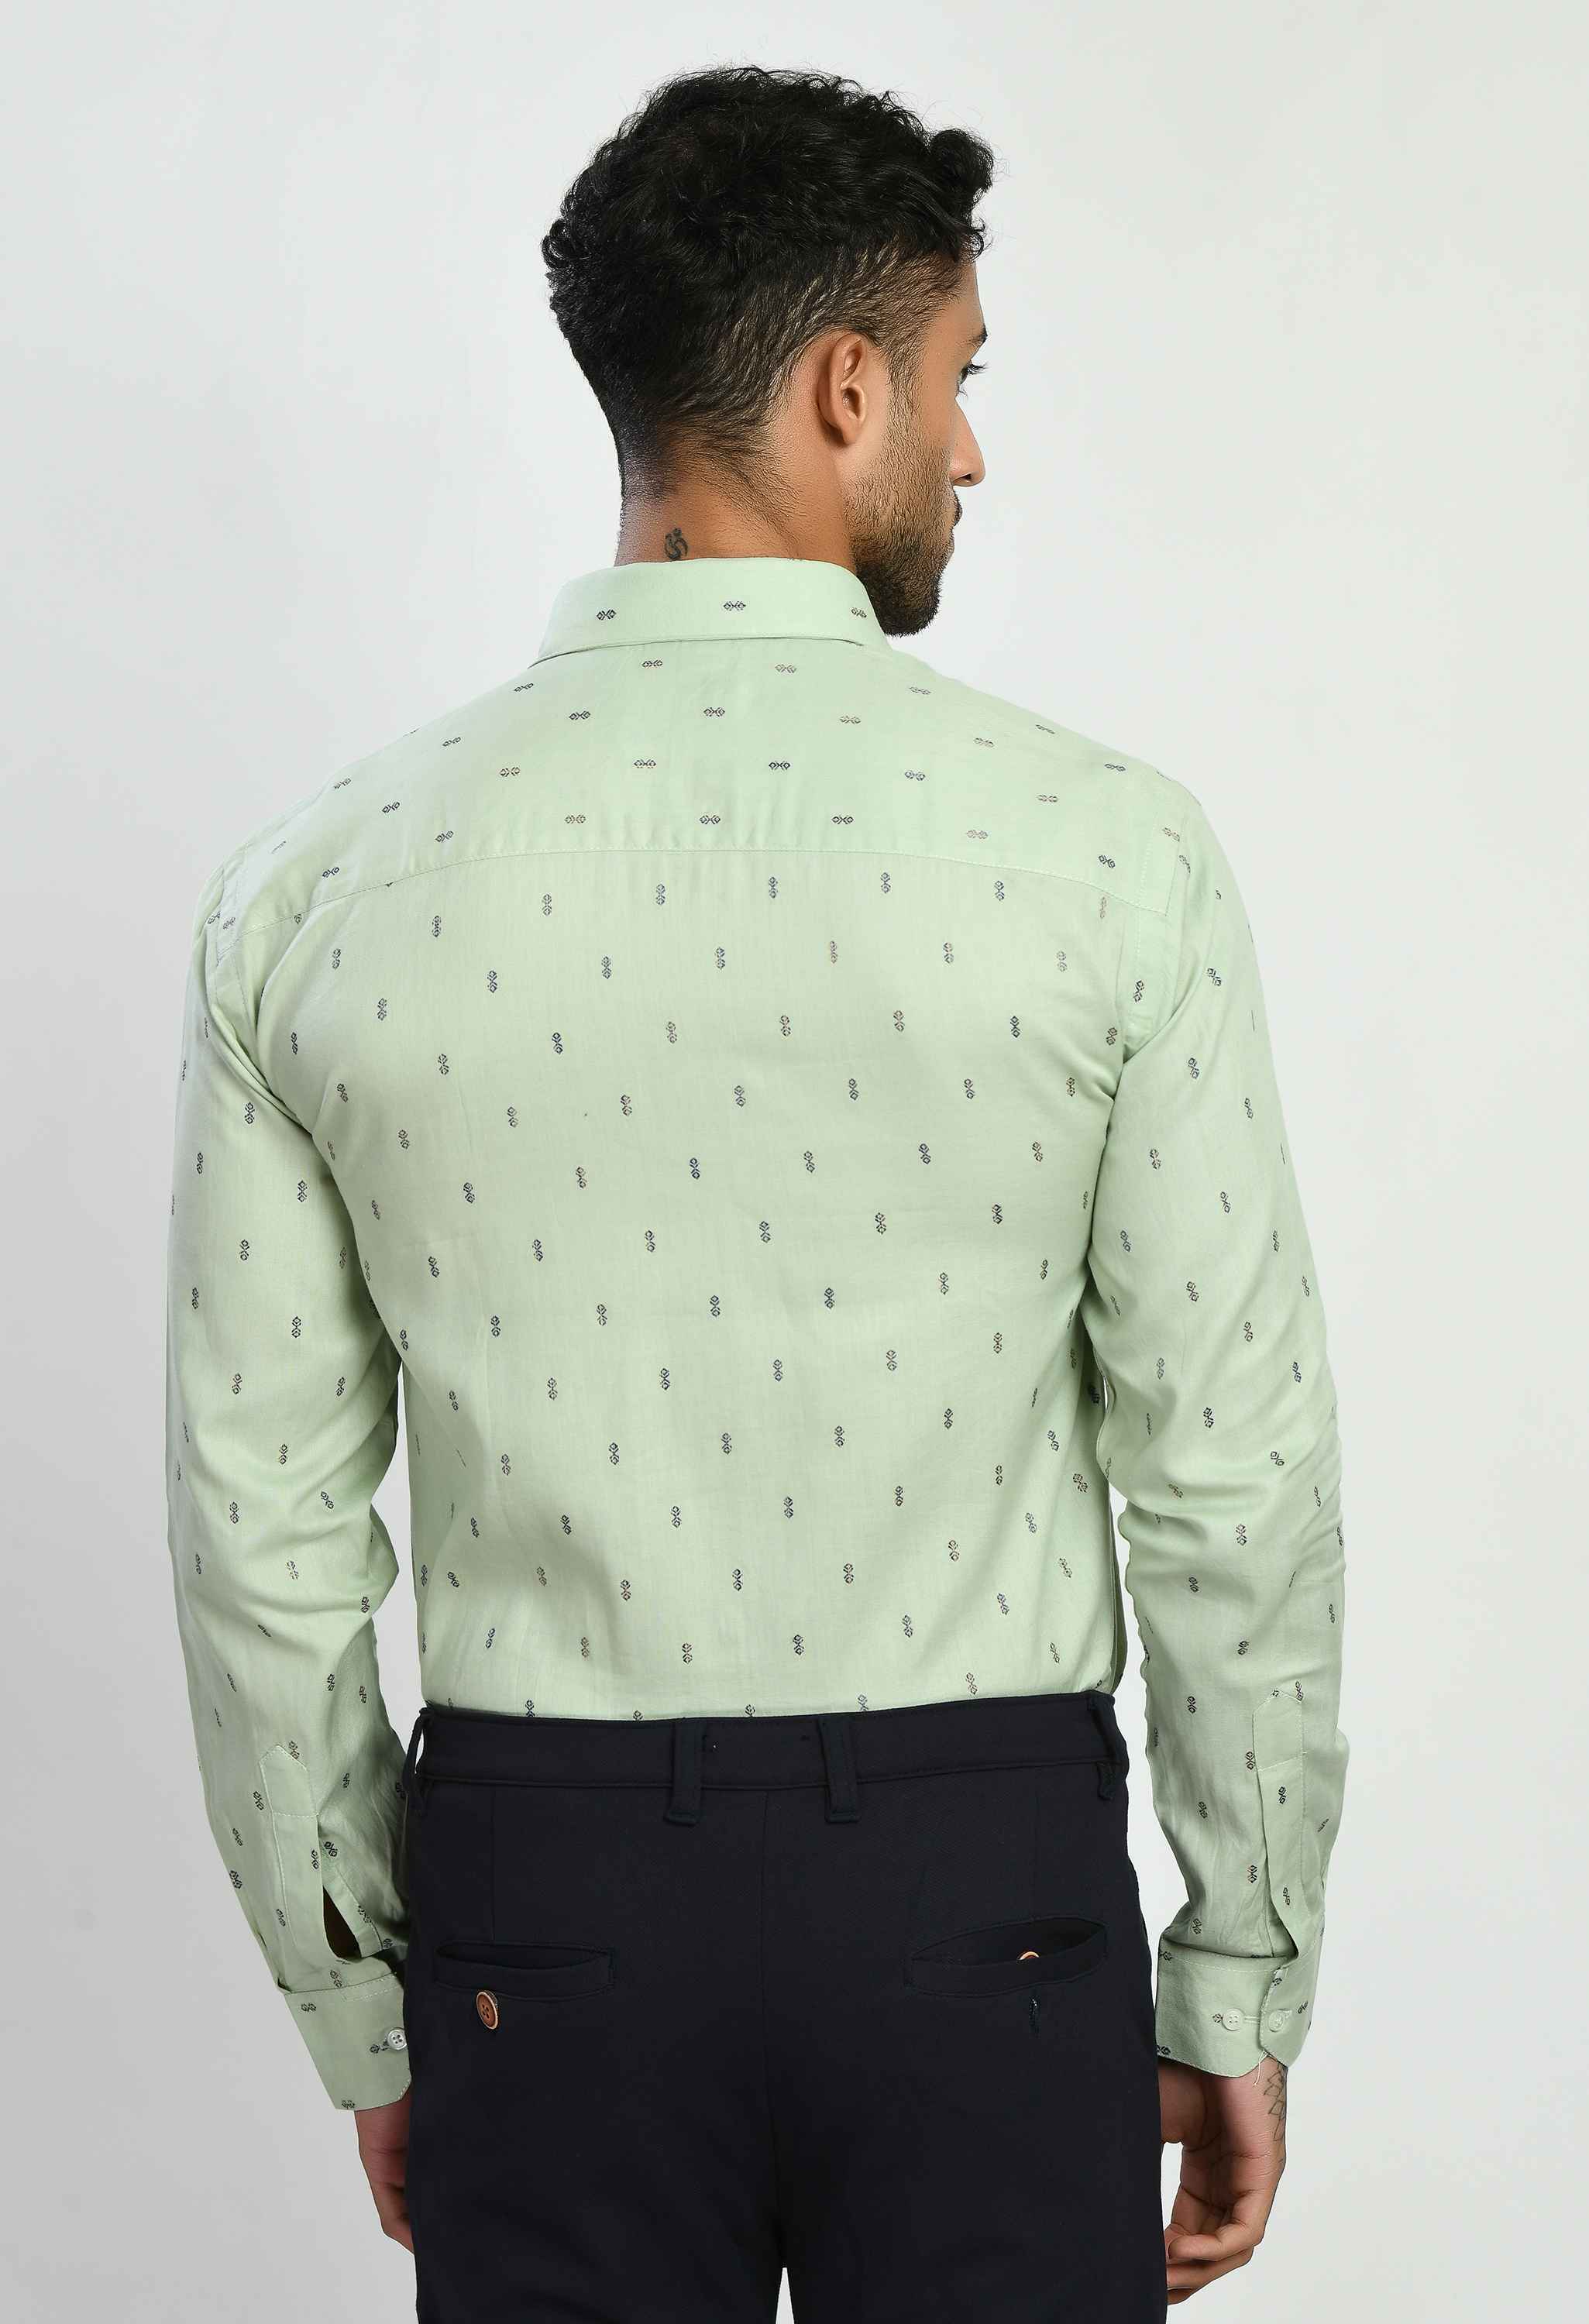 Men's Printed Sea Green Cotton Formal Shirt